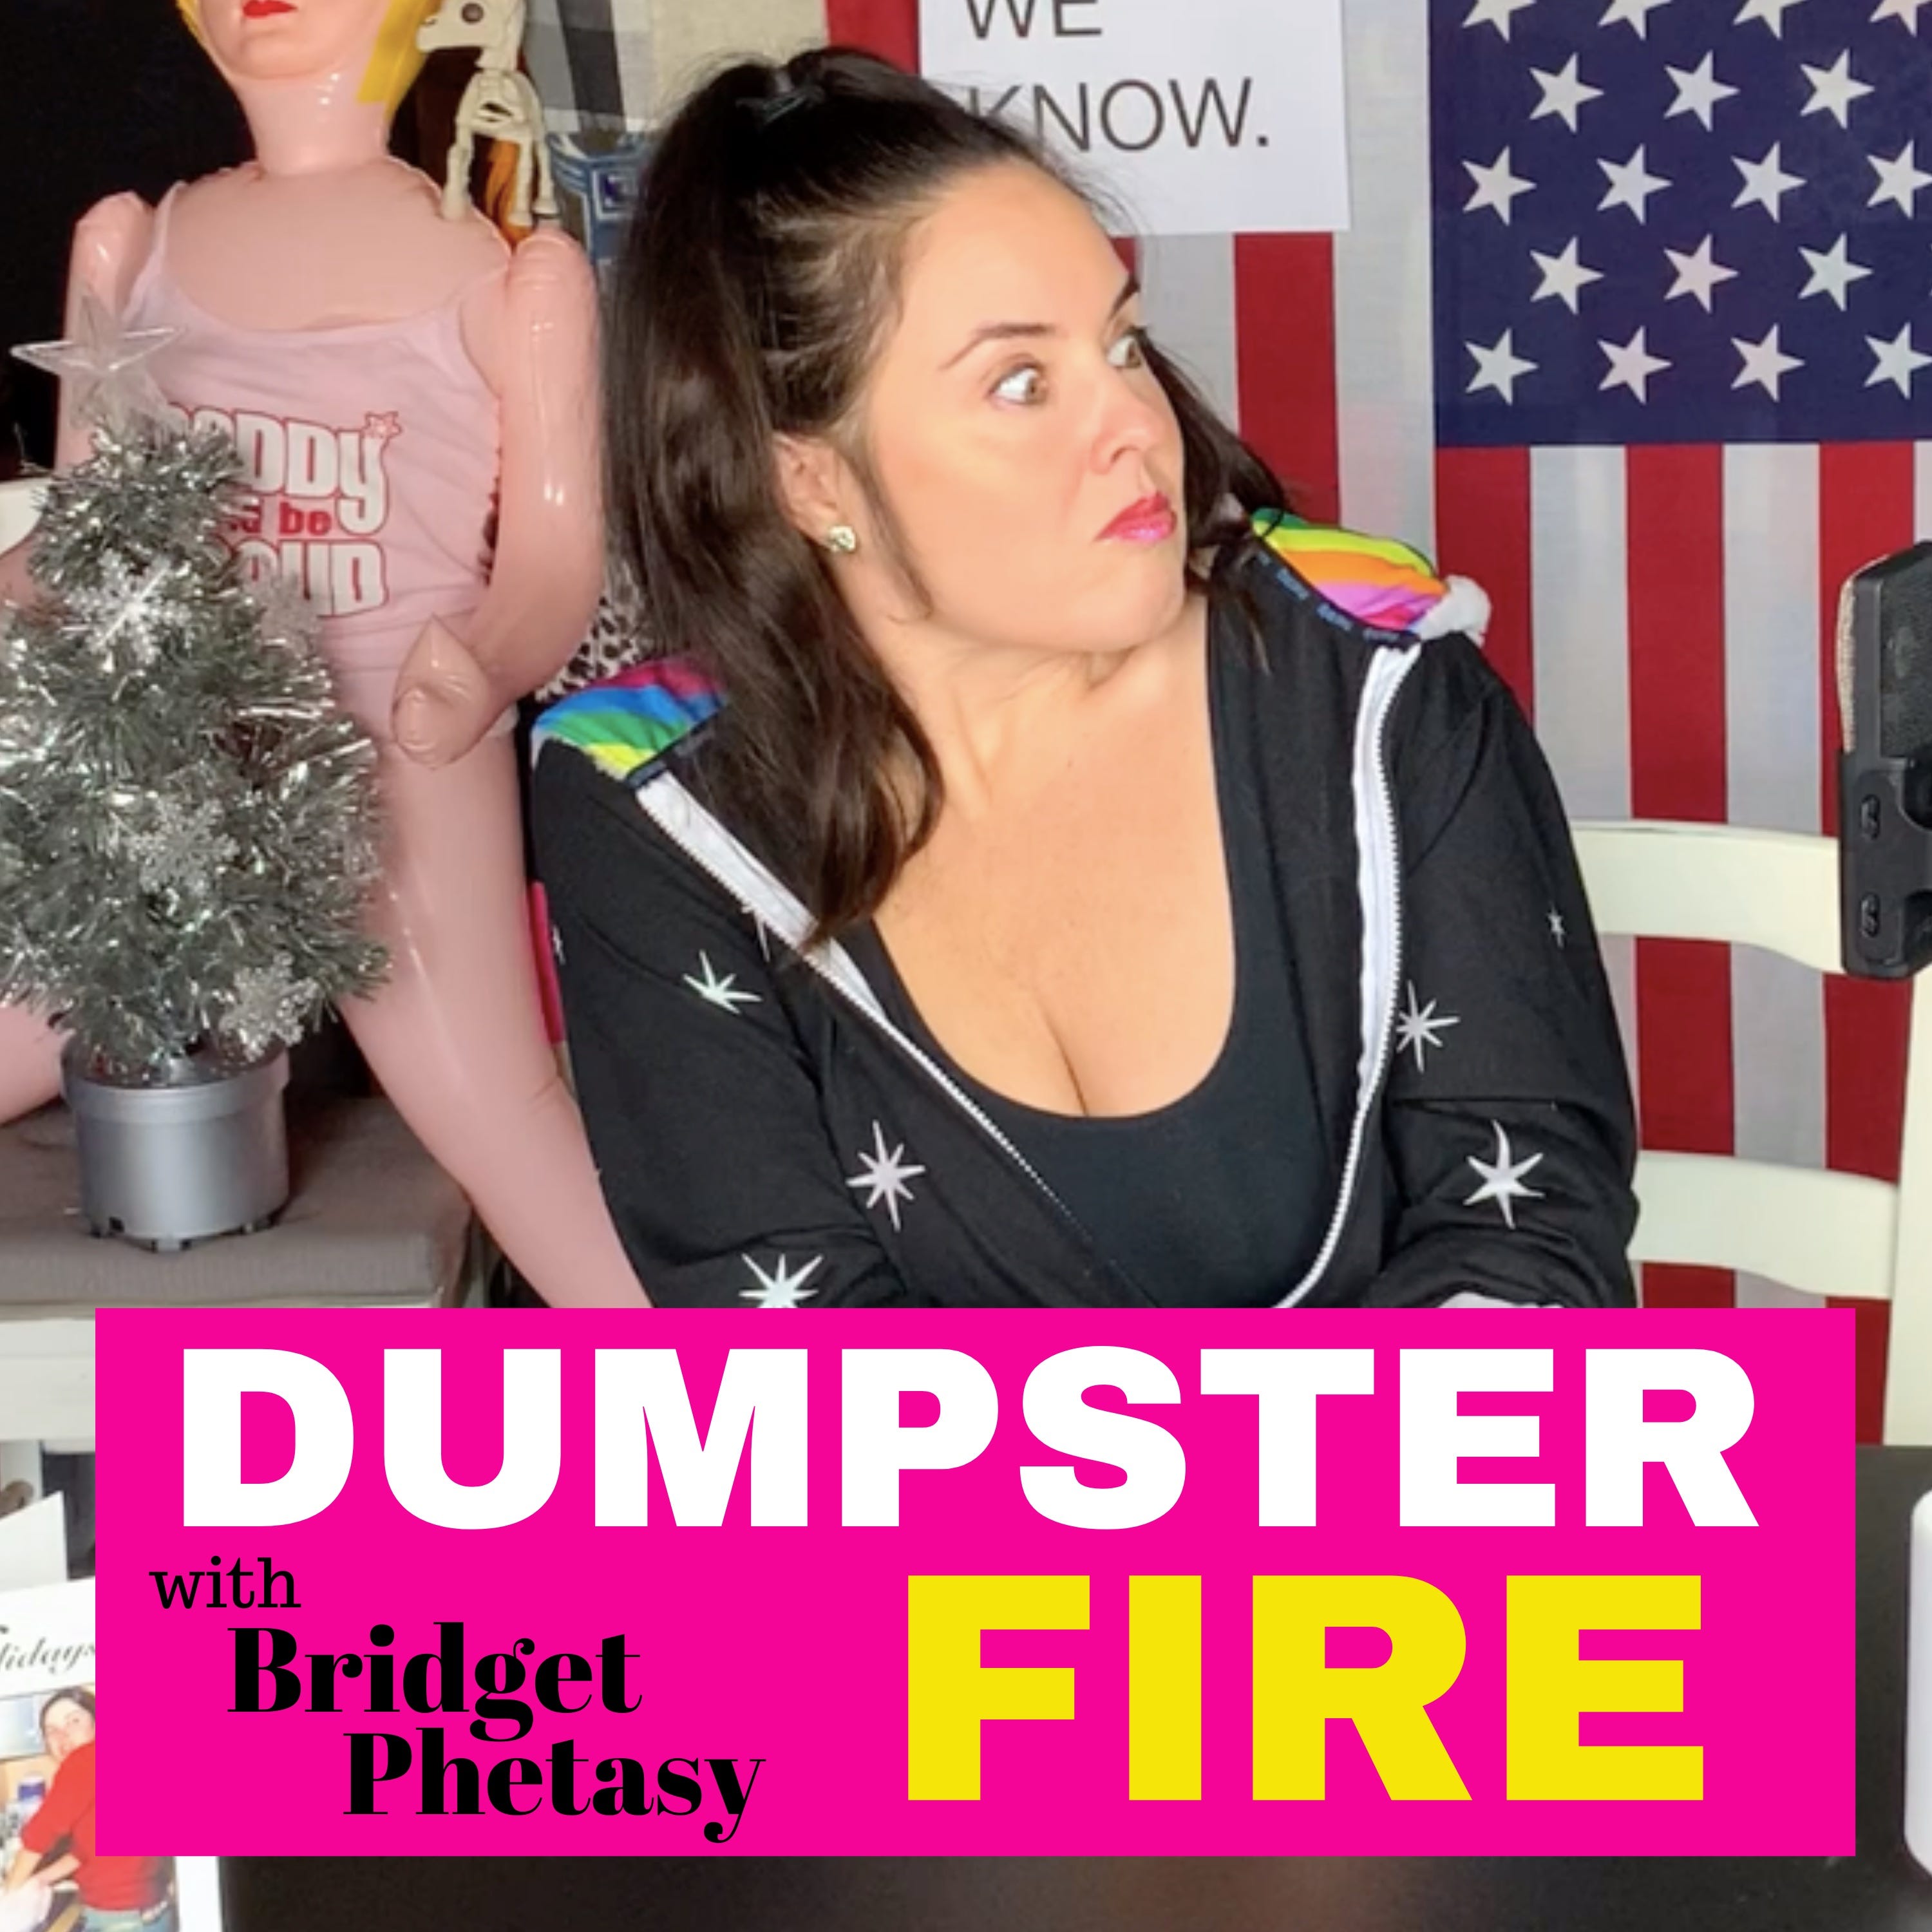 Dumpster Fire 43 - Senator, PornHub, MasterCard, Covid Deaths, 9/11